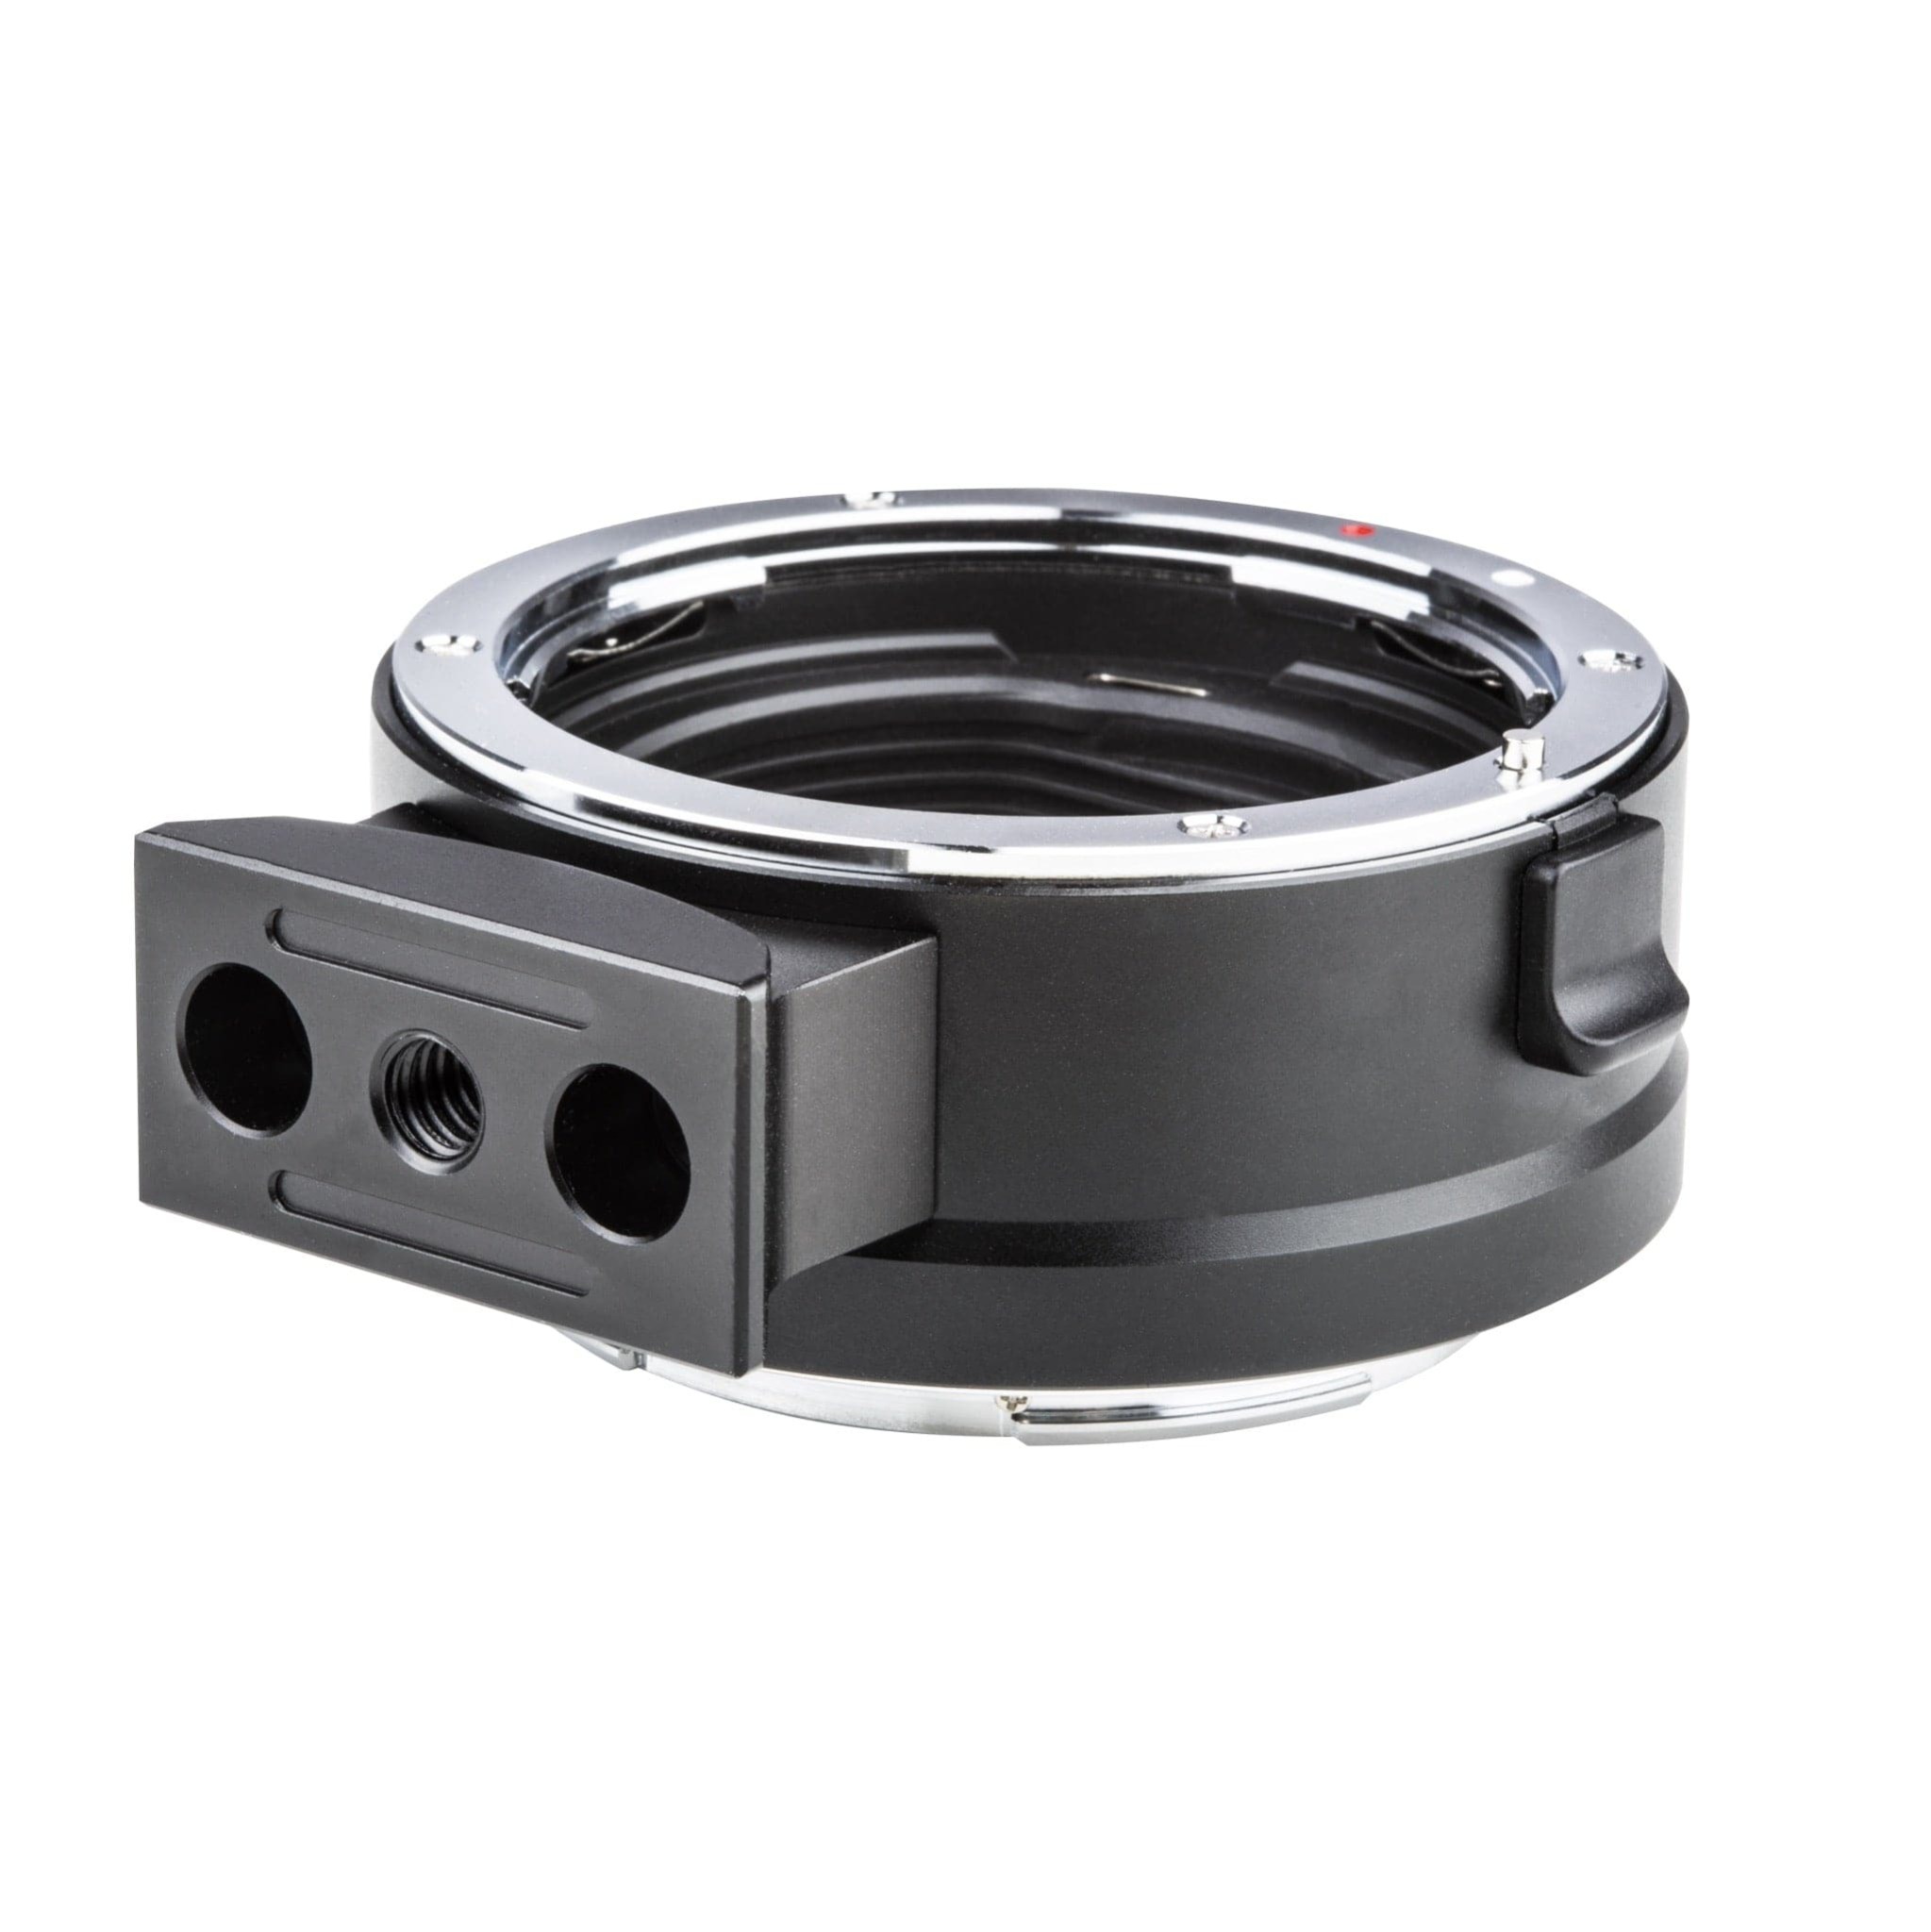 Viltrox EF-Z Lens Mount Adapter with Canon EF/EF-S Lens to Nikon